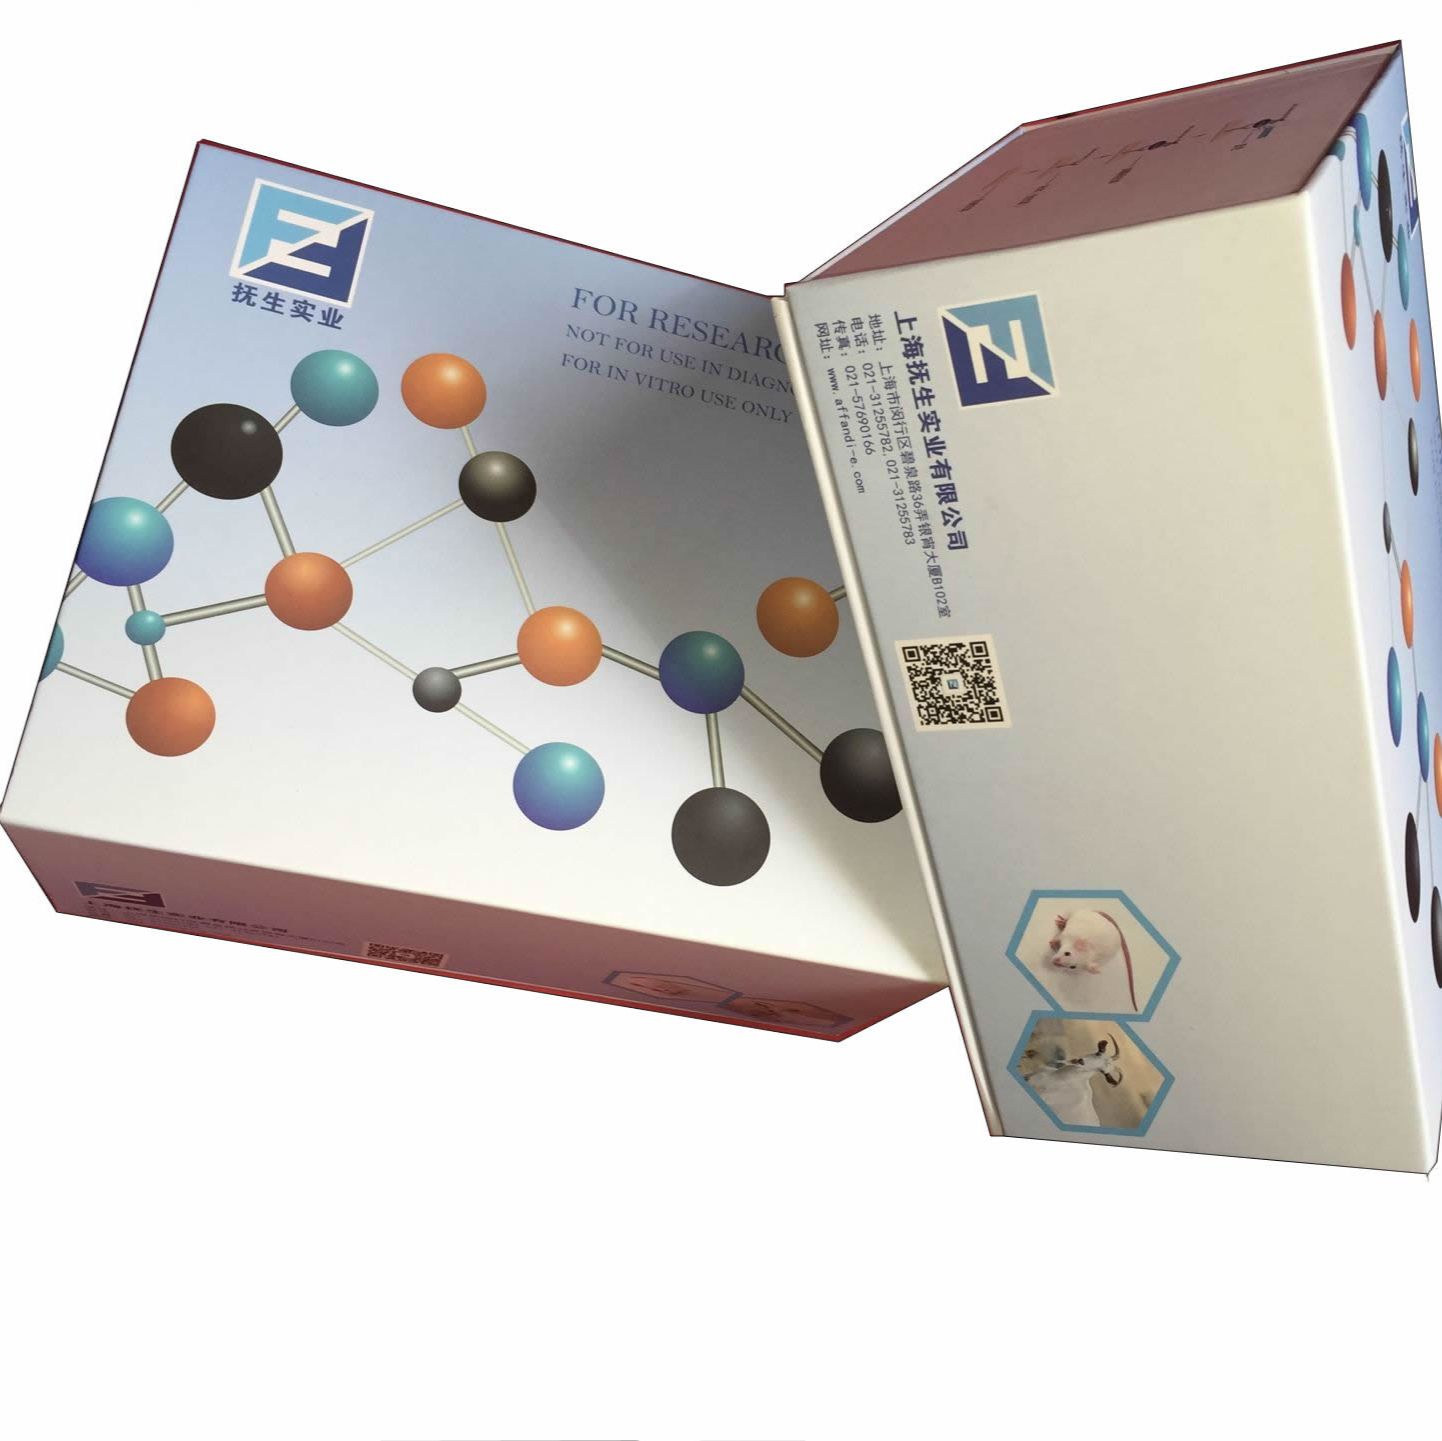 FOR Scavenger receptor cysteine-rich type 1 protein M130 ELISA Kit